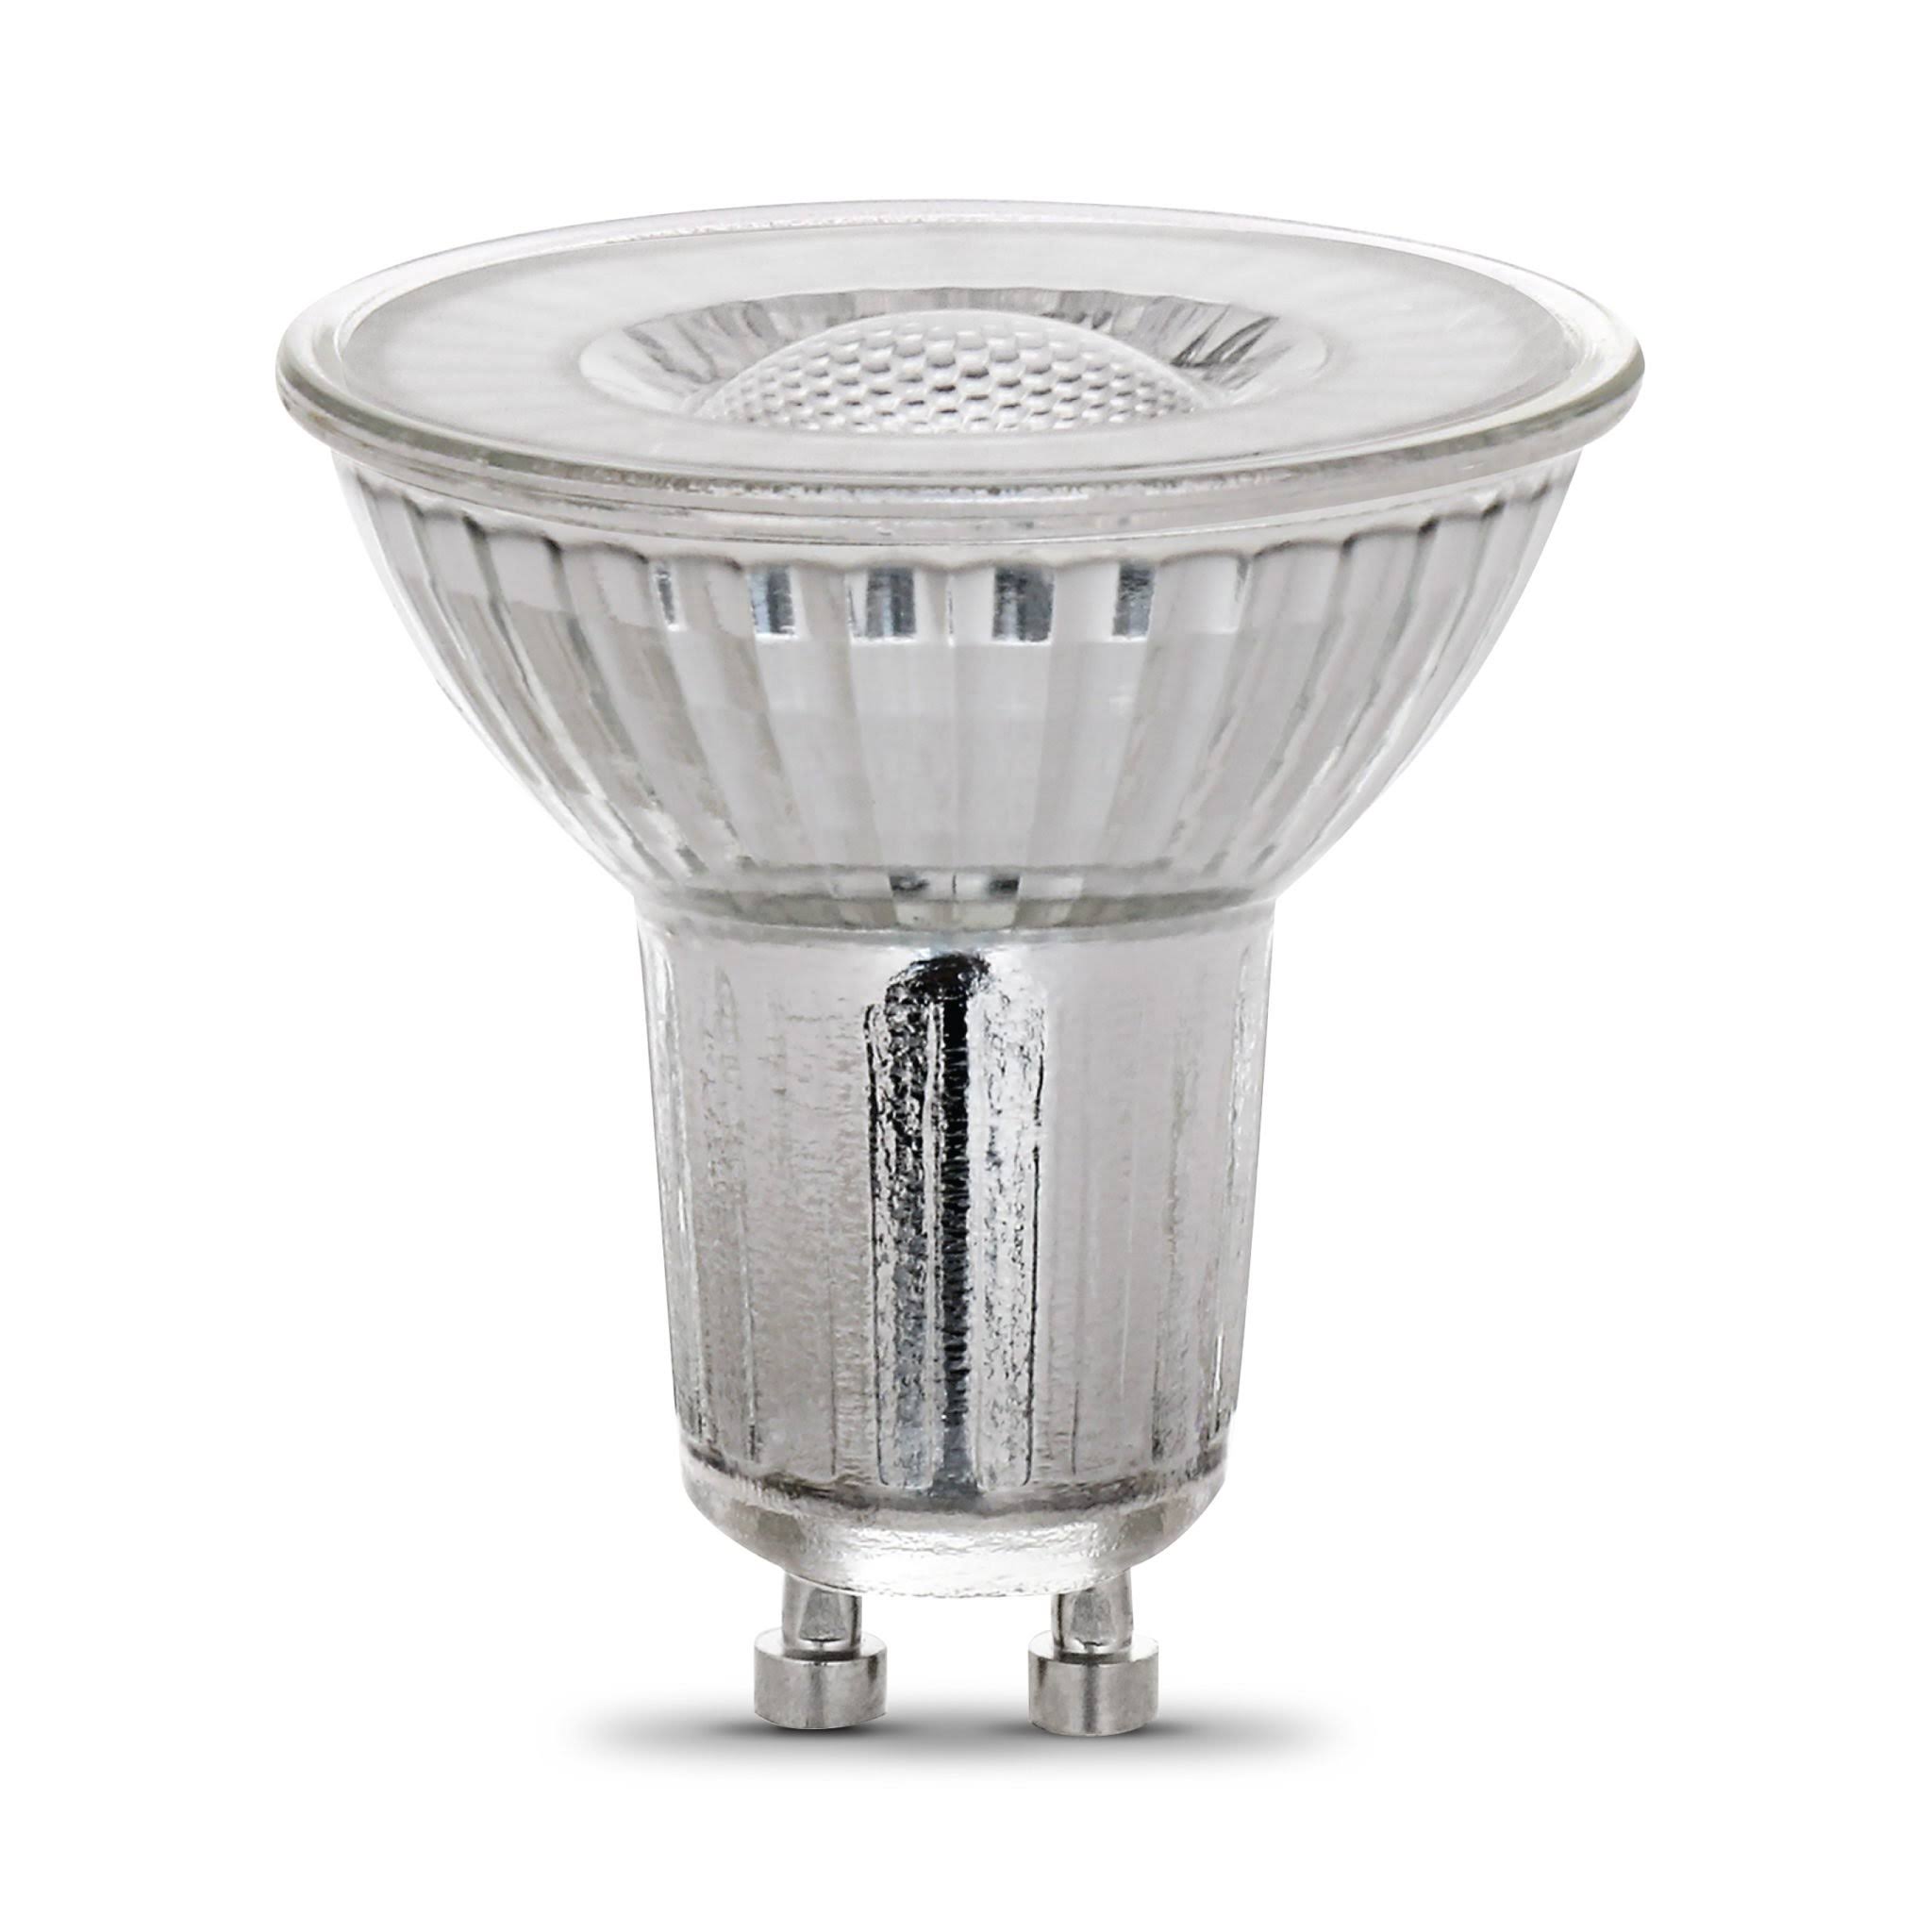 Feit Electric Enhance MR16 GU10 LED Bulb Daylight 50 Watt Equivalence 3